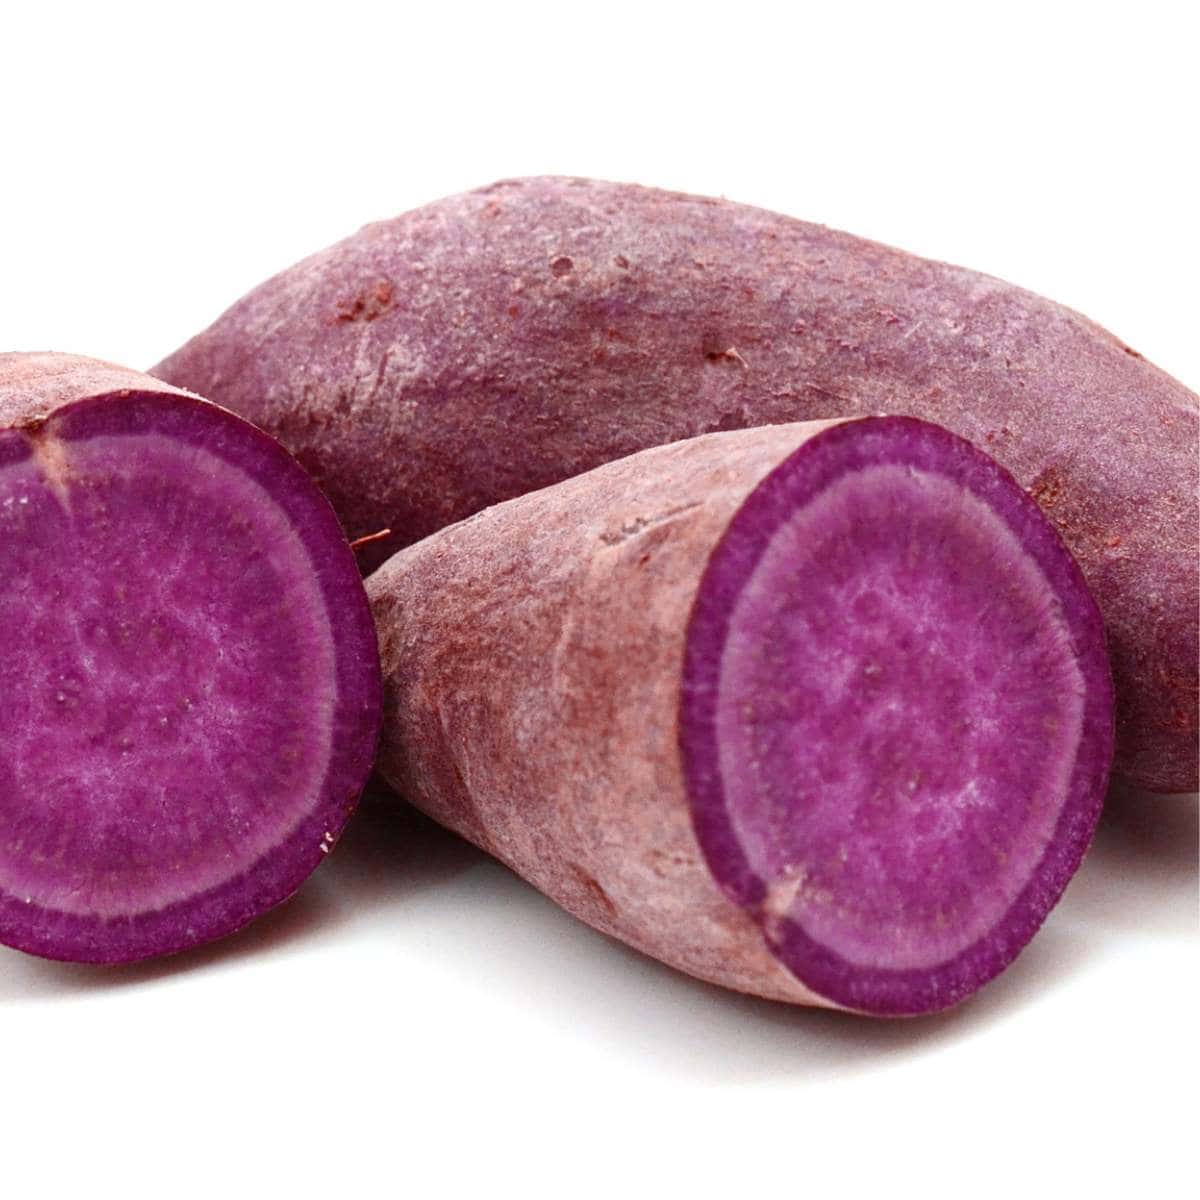         Three purple sweet potatoes on a white background.